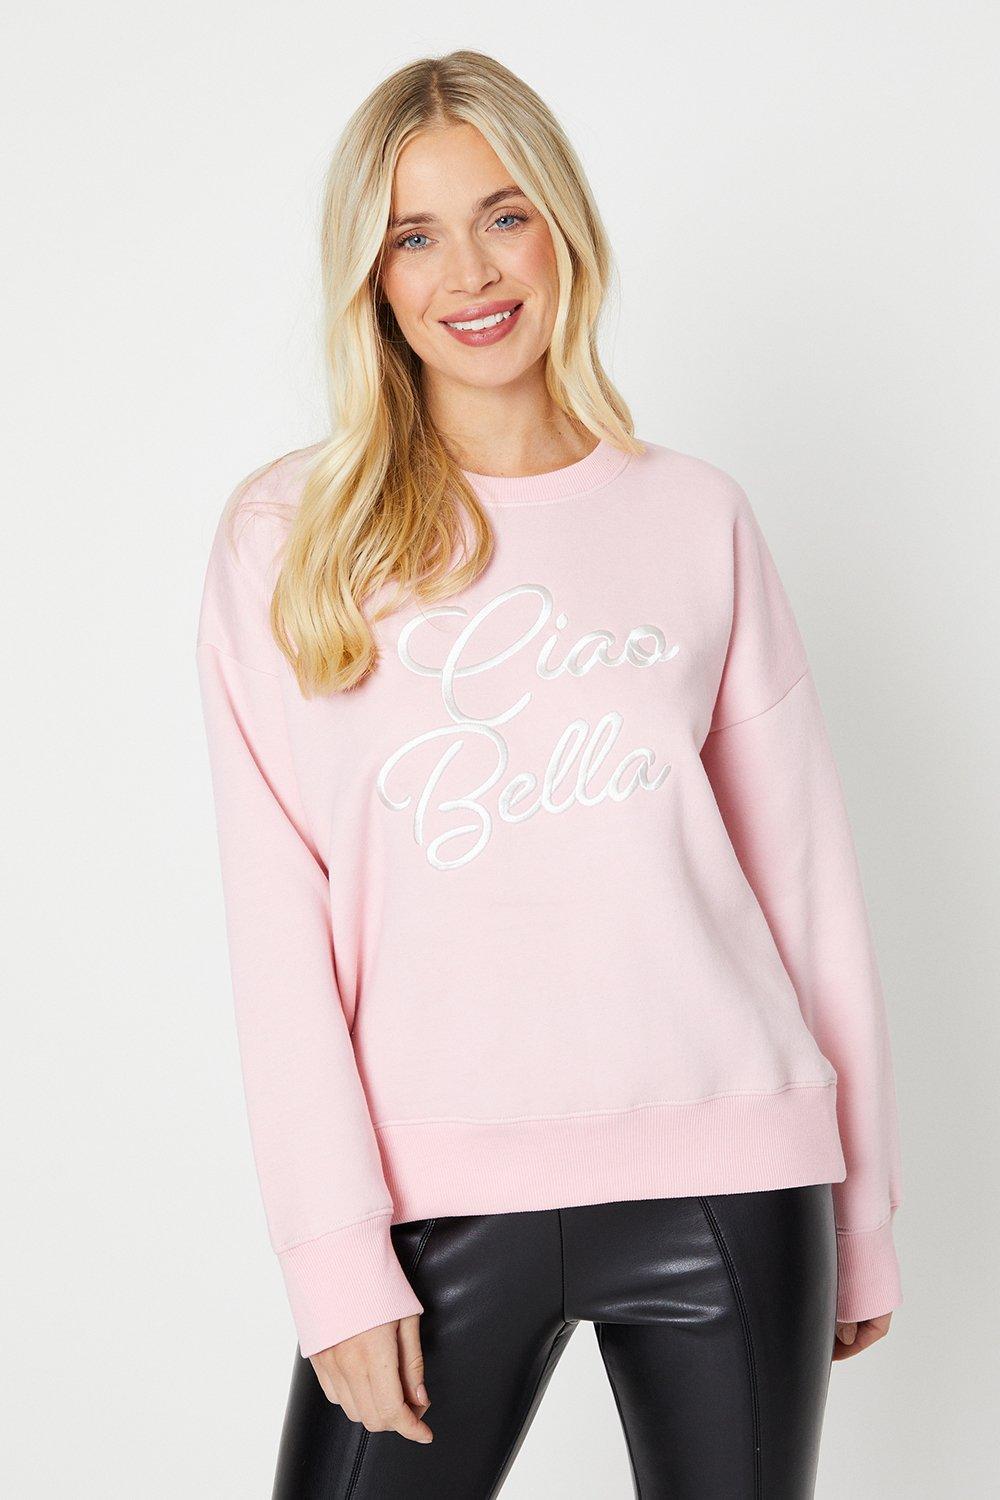 Women’s Petite Ciao Bella Sweatshirt - blush - L